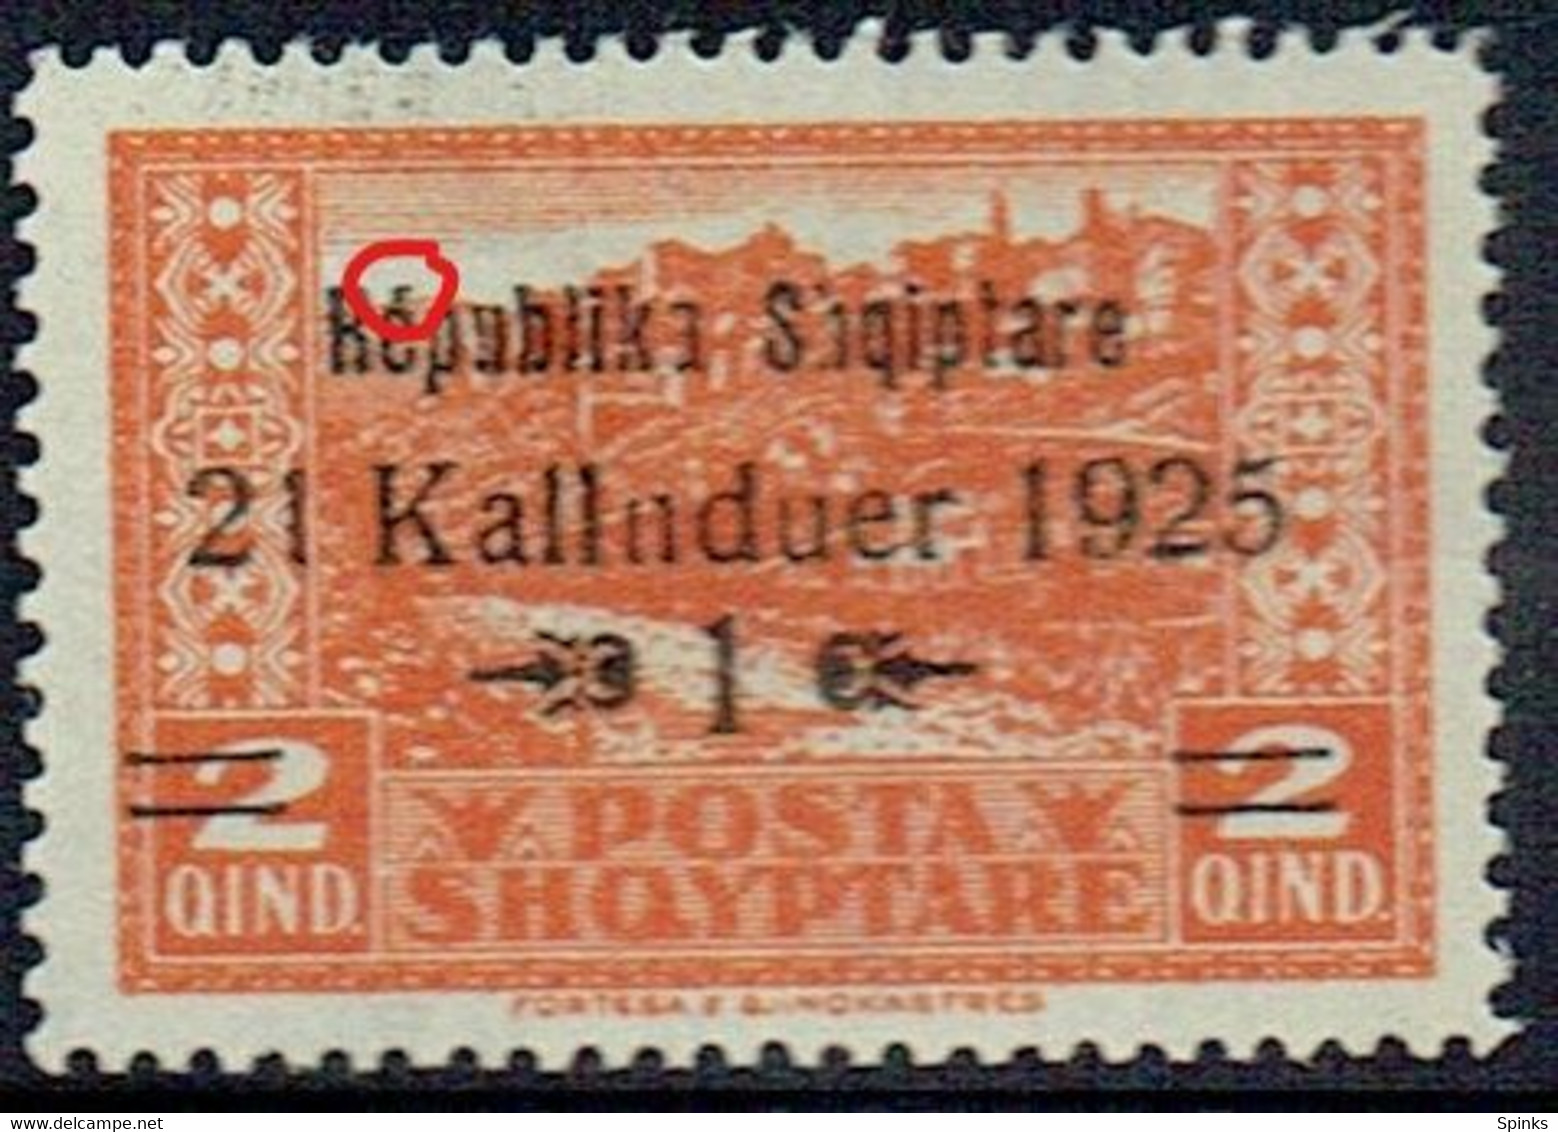 ALBANIA 1925 1 On 2q Overprint Variety In "Republika" SG 171c MH - Albania